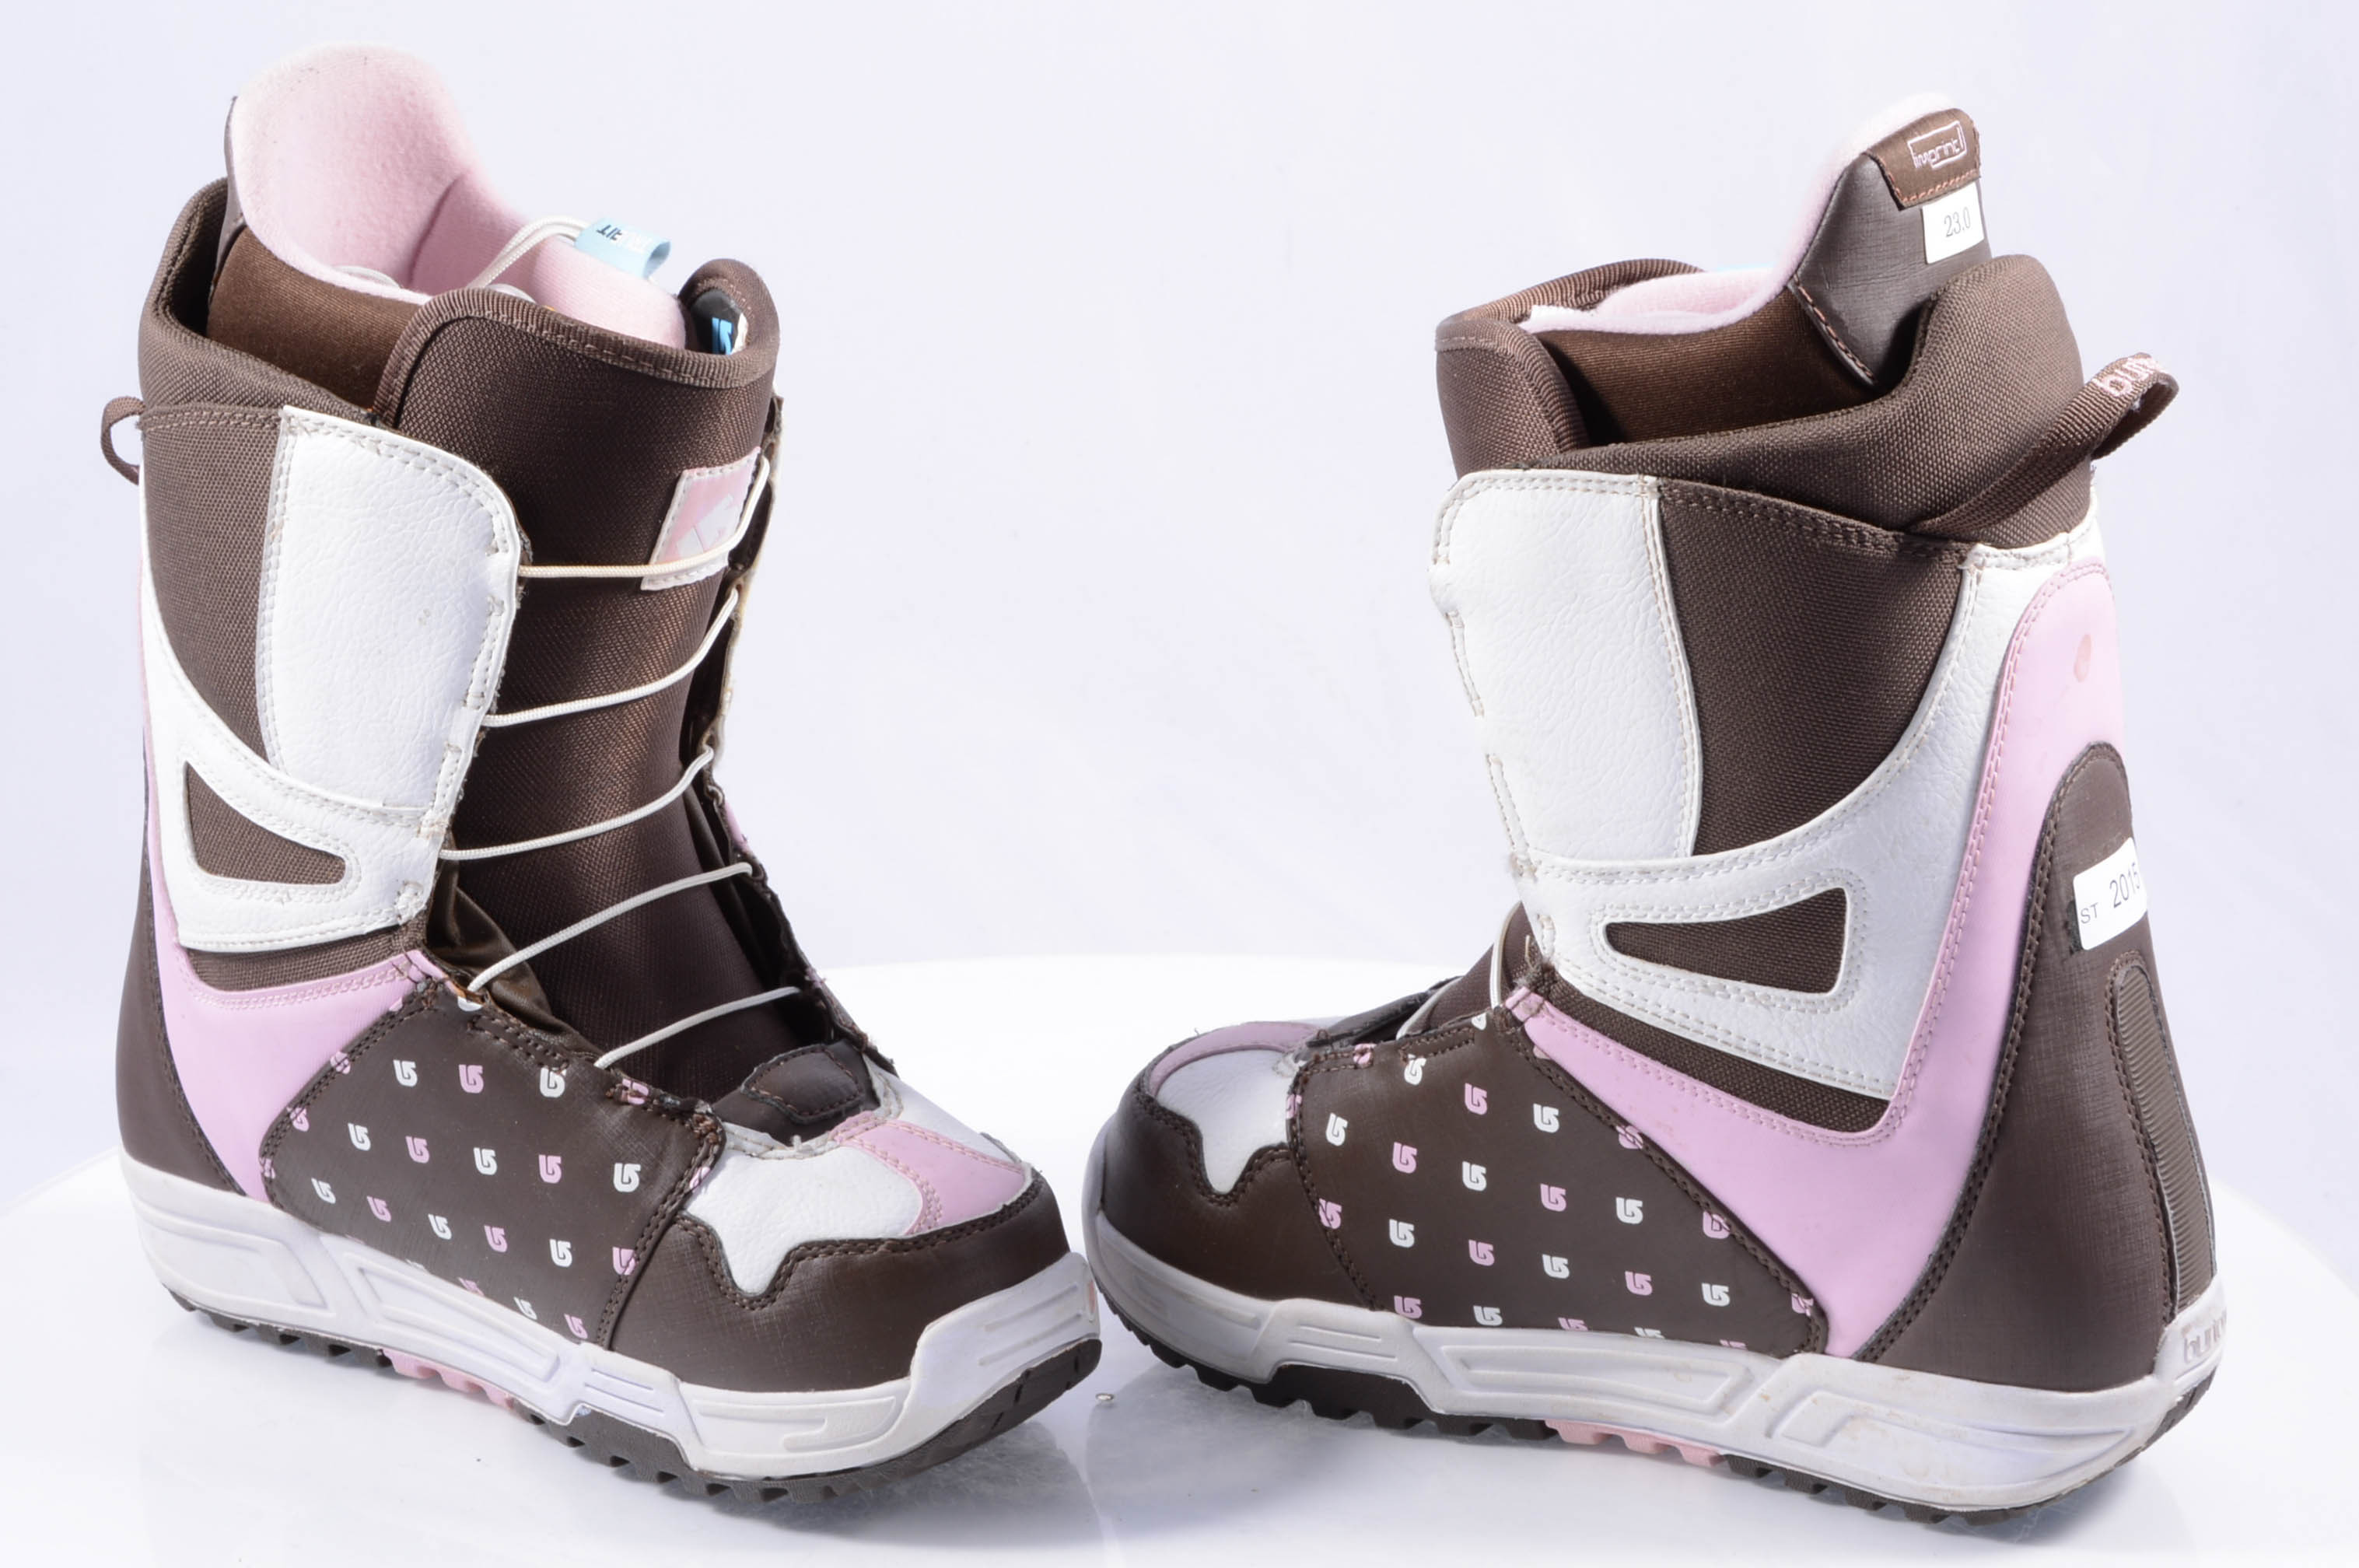 meel puree Elektronisch snowboard schoenen BURTON MINT, IMPRINT 1, TRUE FIT, brown/white/pink -  Mardosport.be